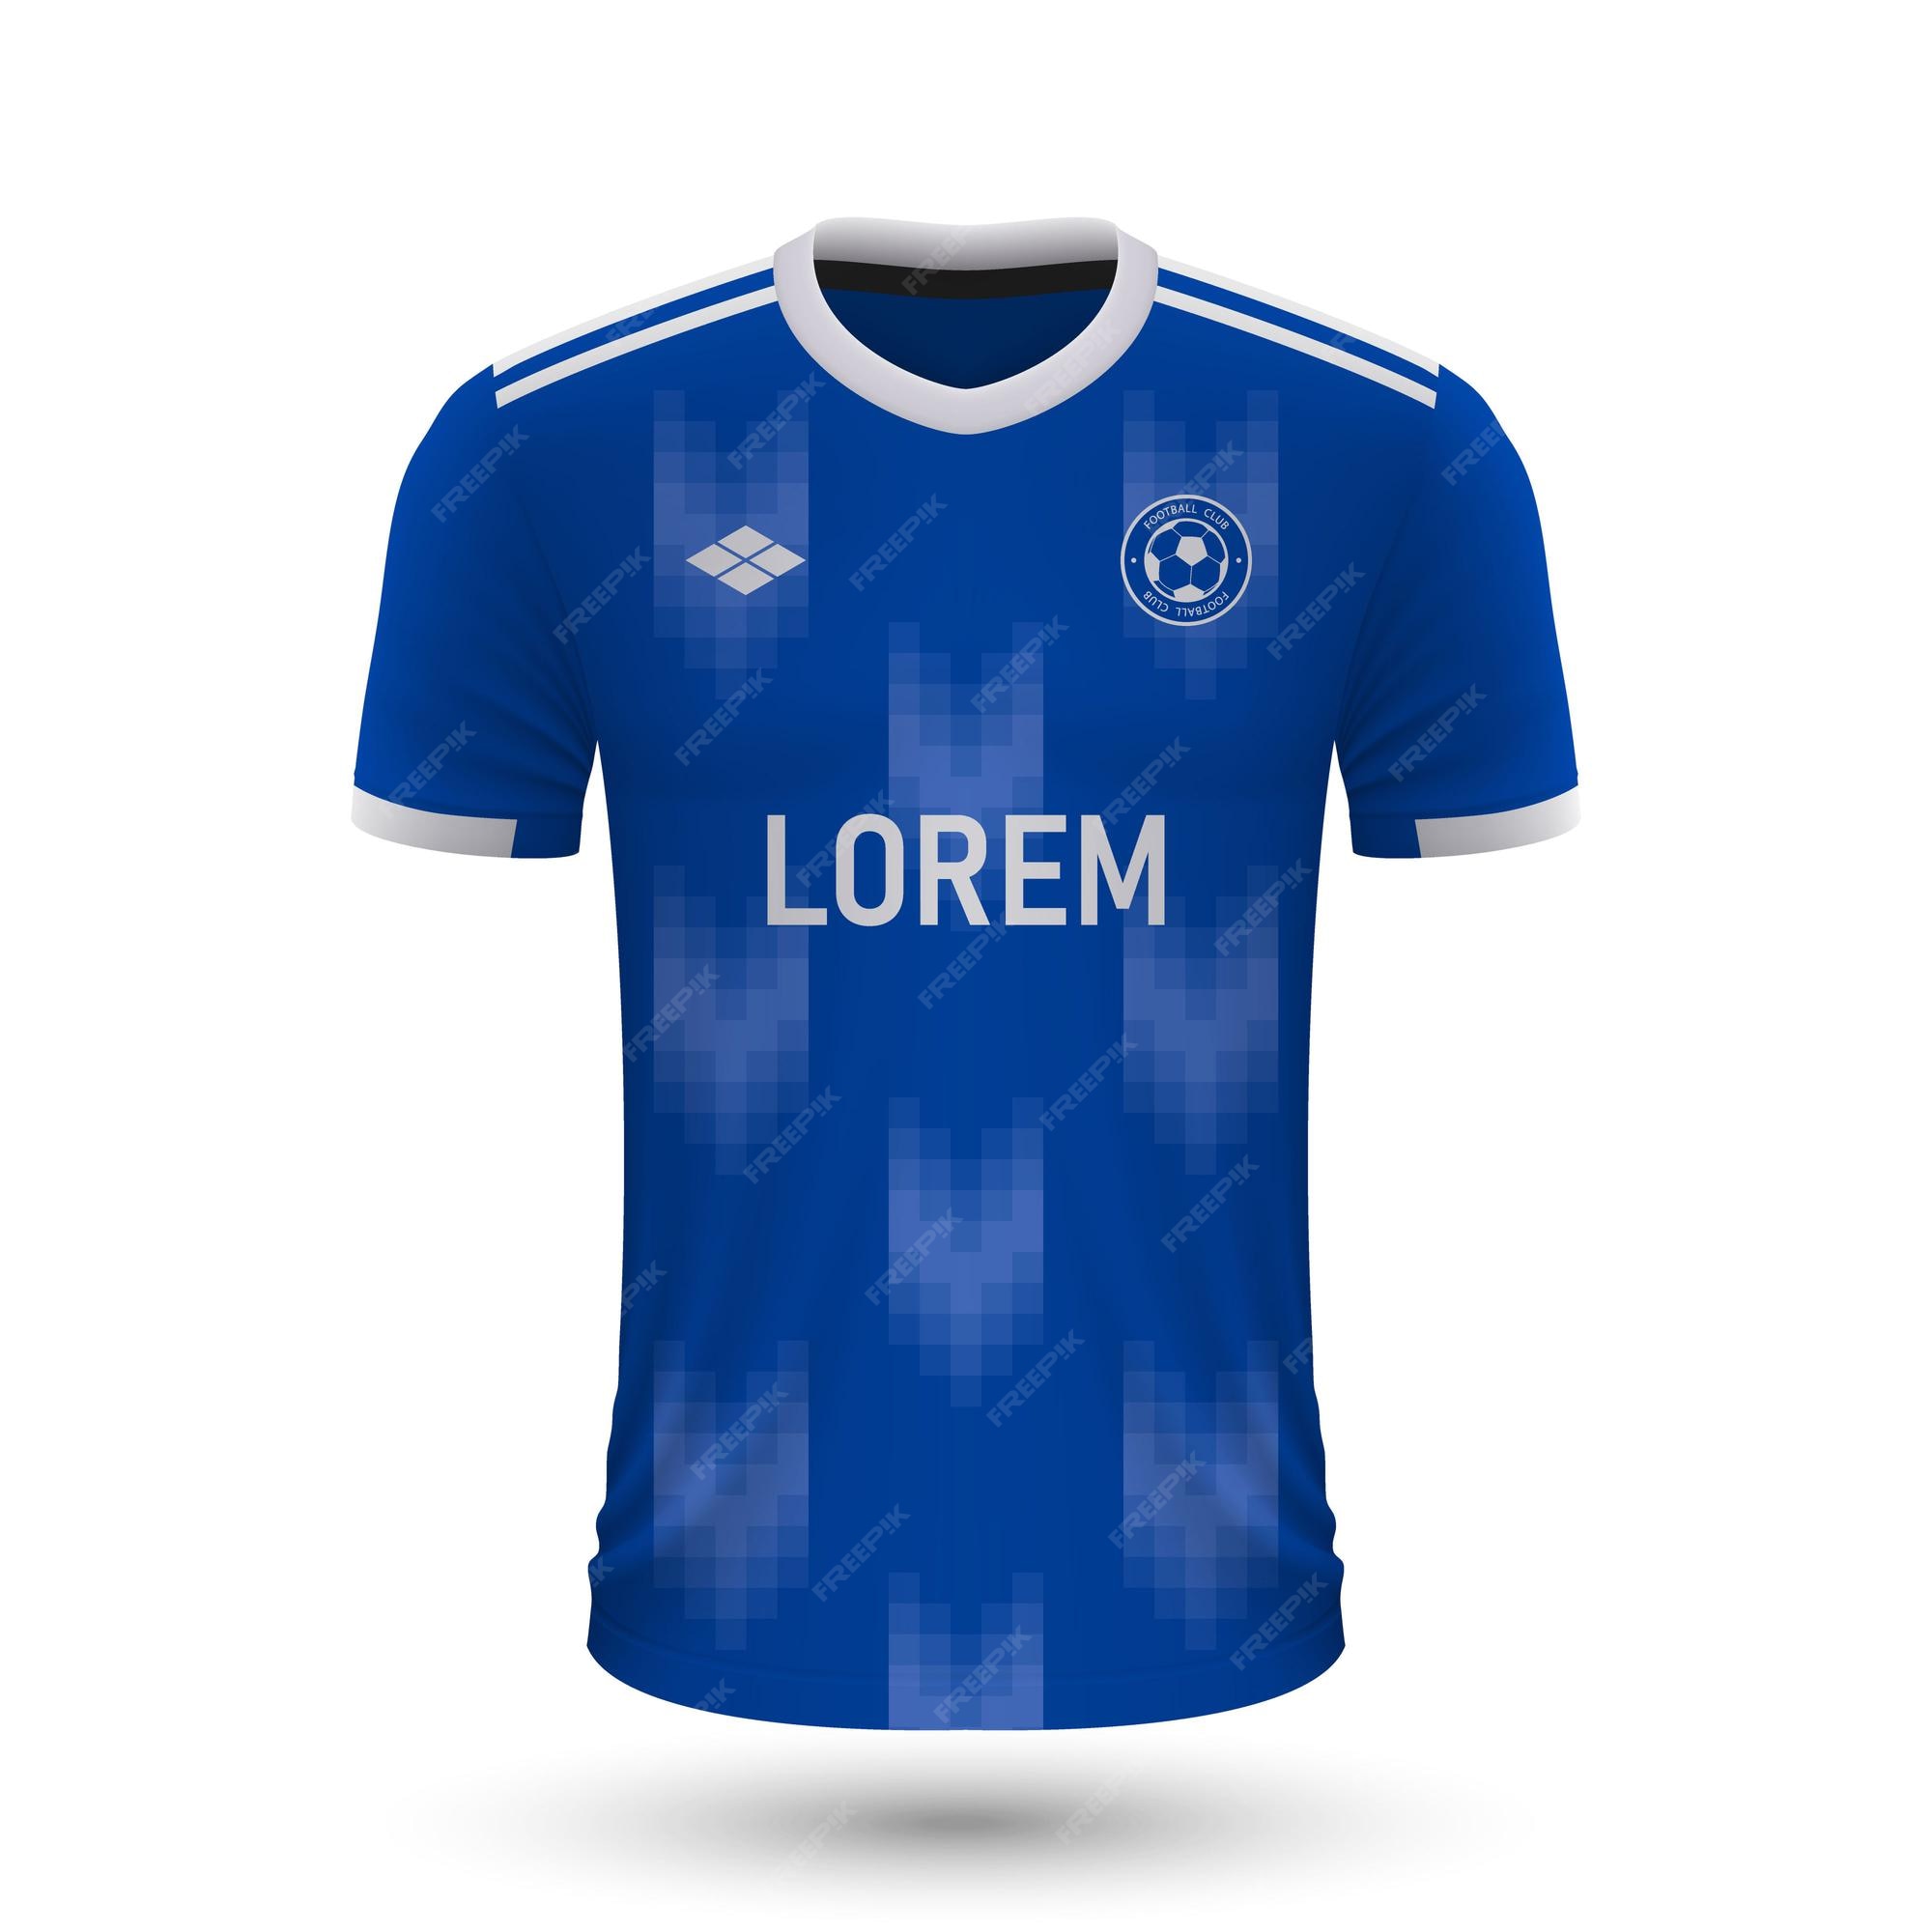 Premium Vector | Realistic soccer shirt strasbourg 2022, jersey ...